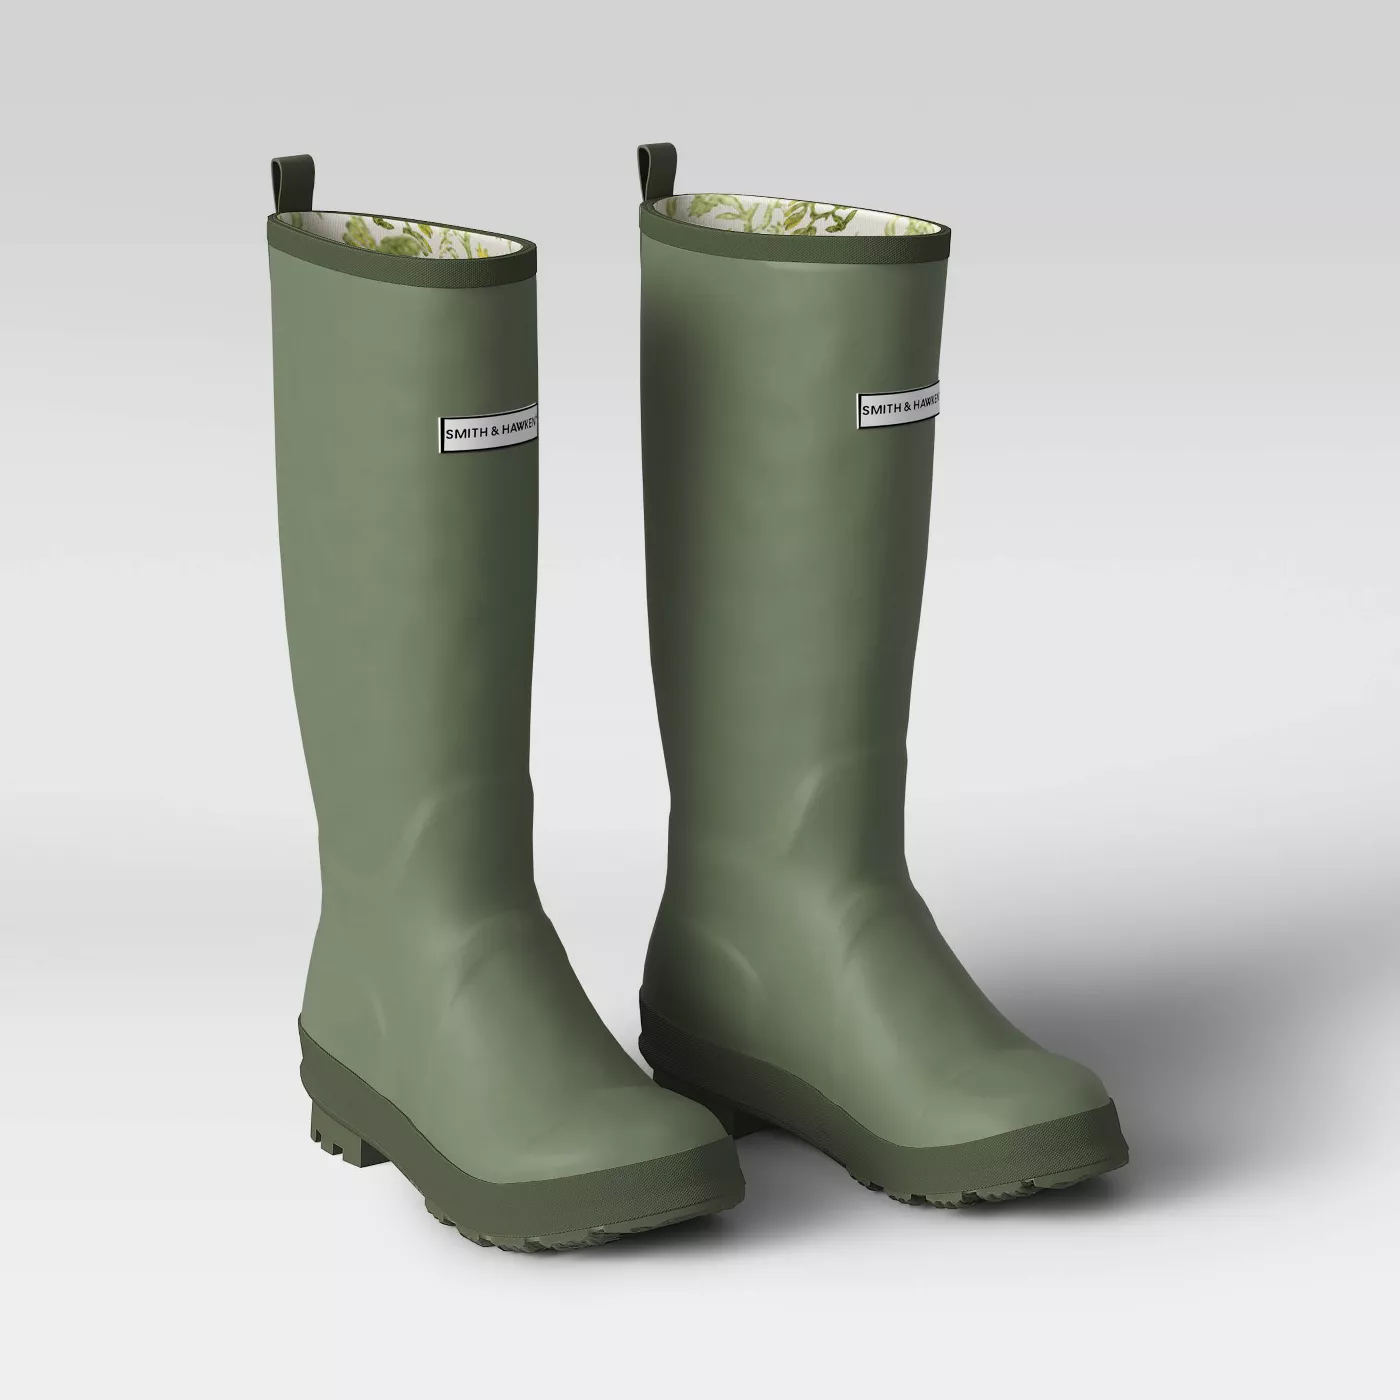 Women's Tall Rain Boots - Smith & Hawken™ - image 1 of 5